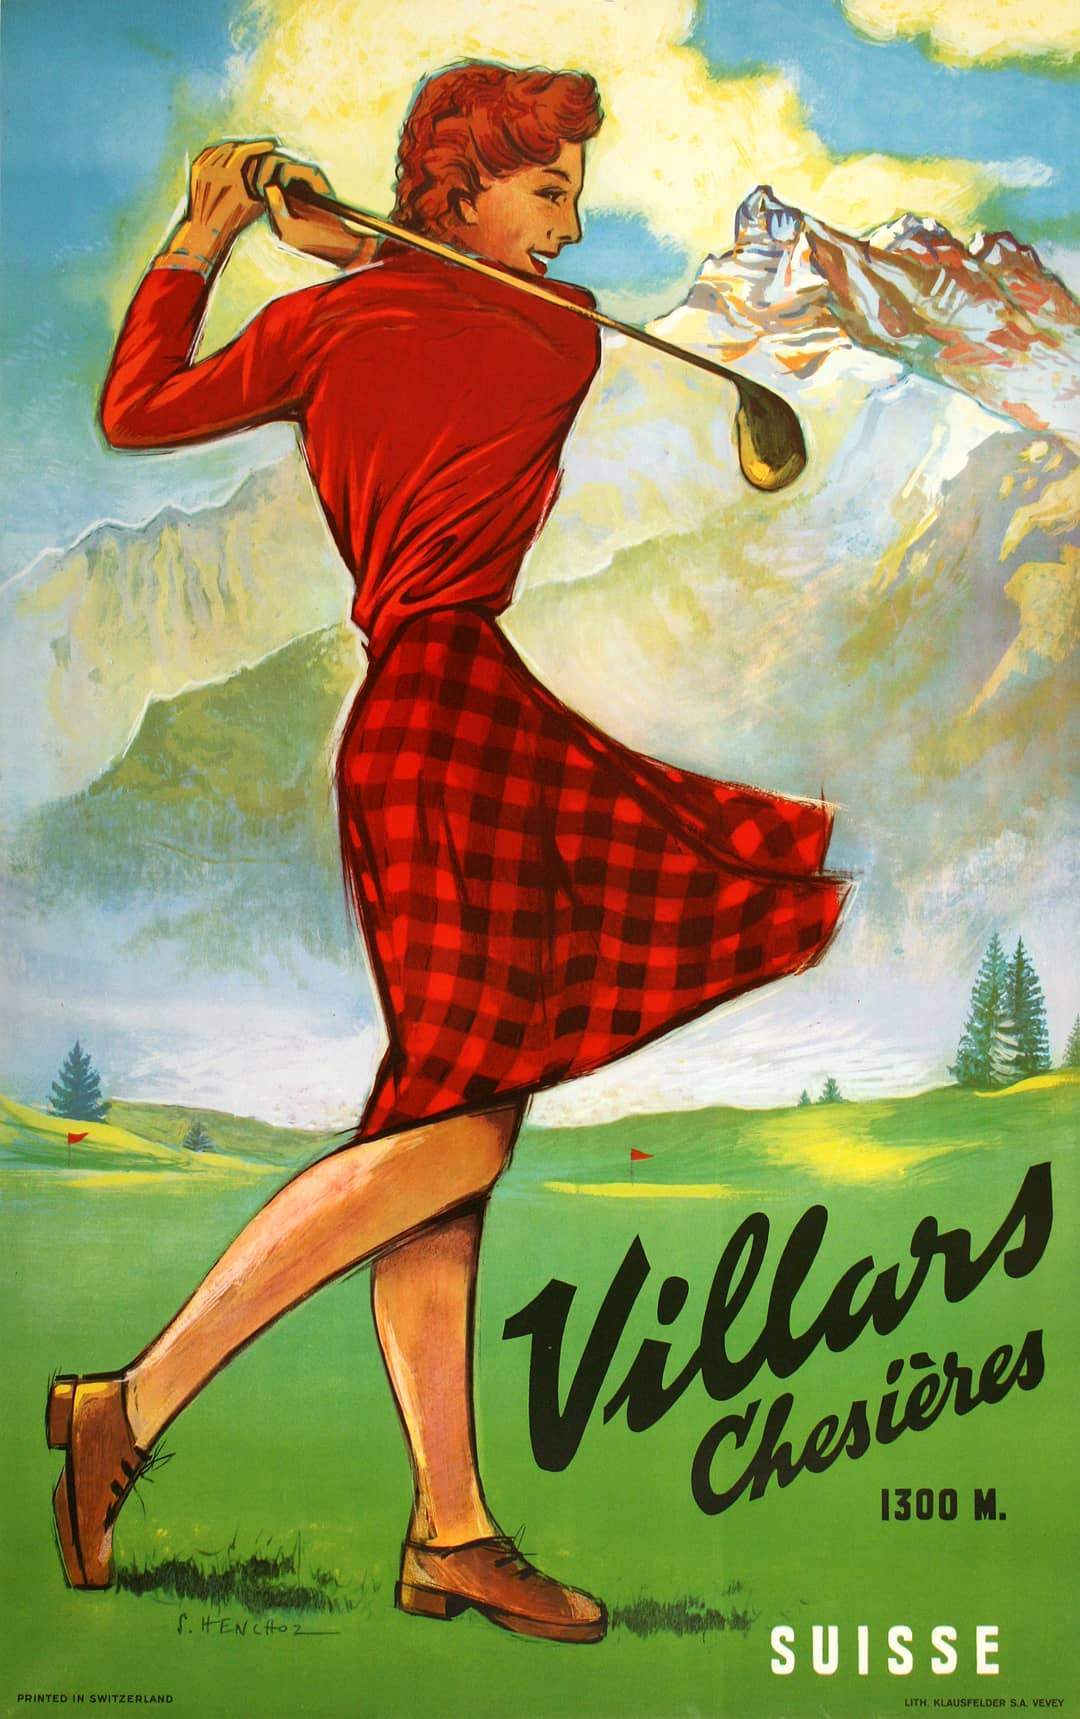 Villars Chesieres Original 1948 Poster by Samuel Henchoz - Swiss Resort